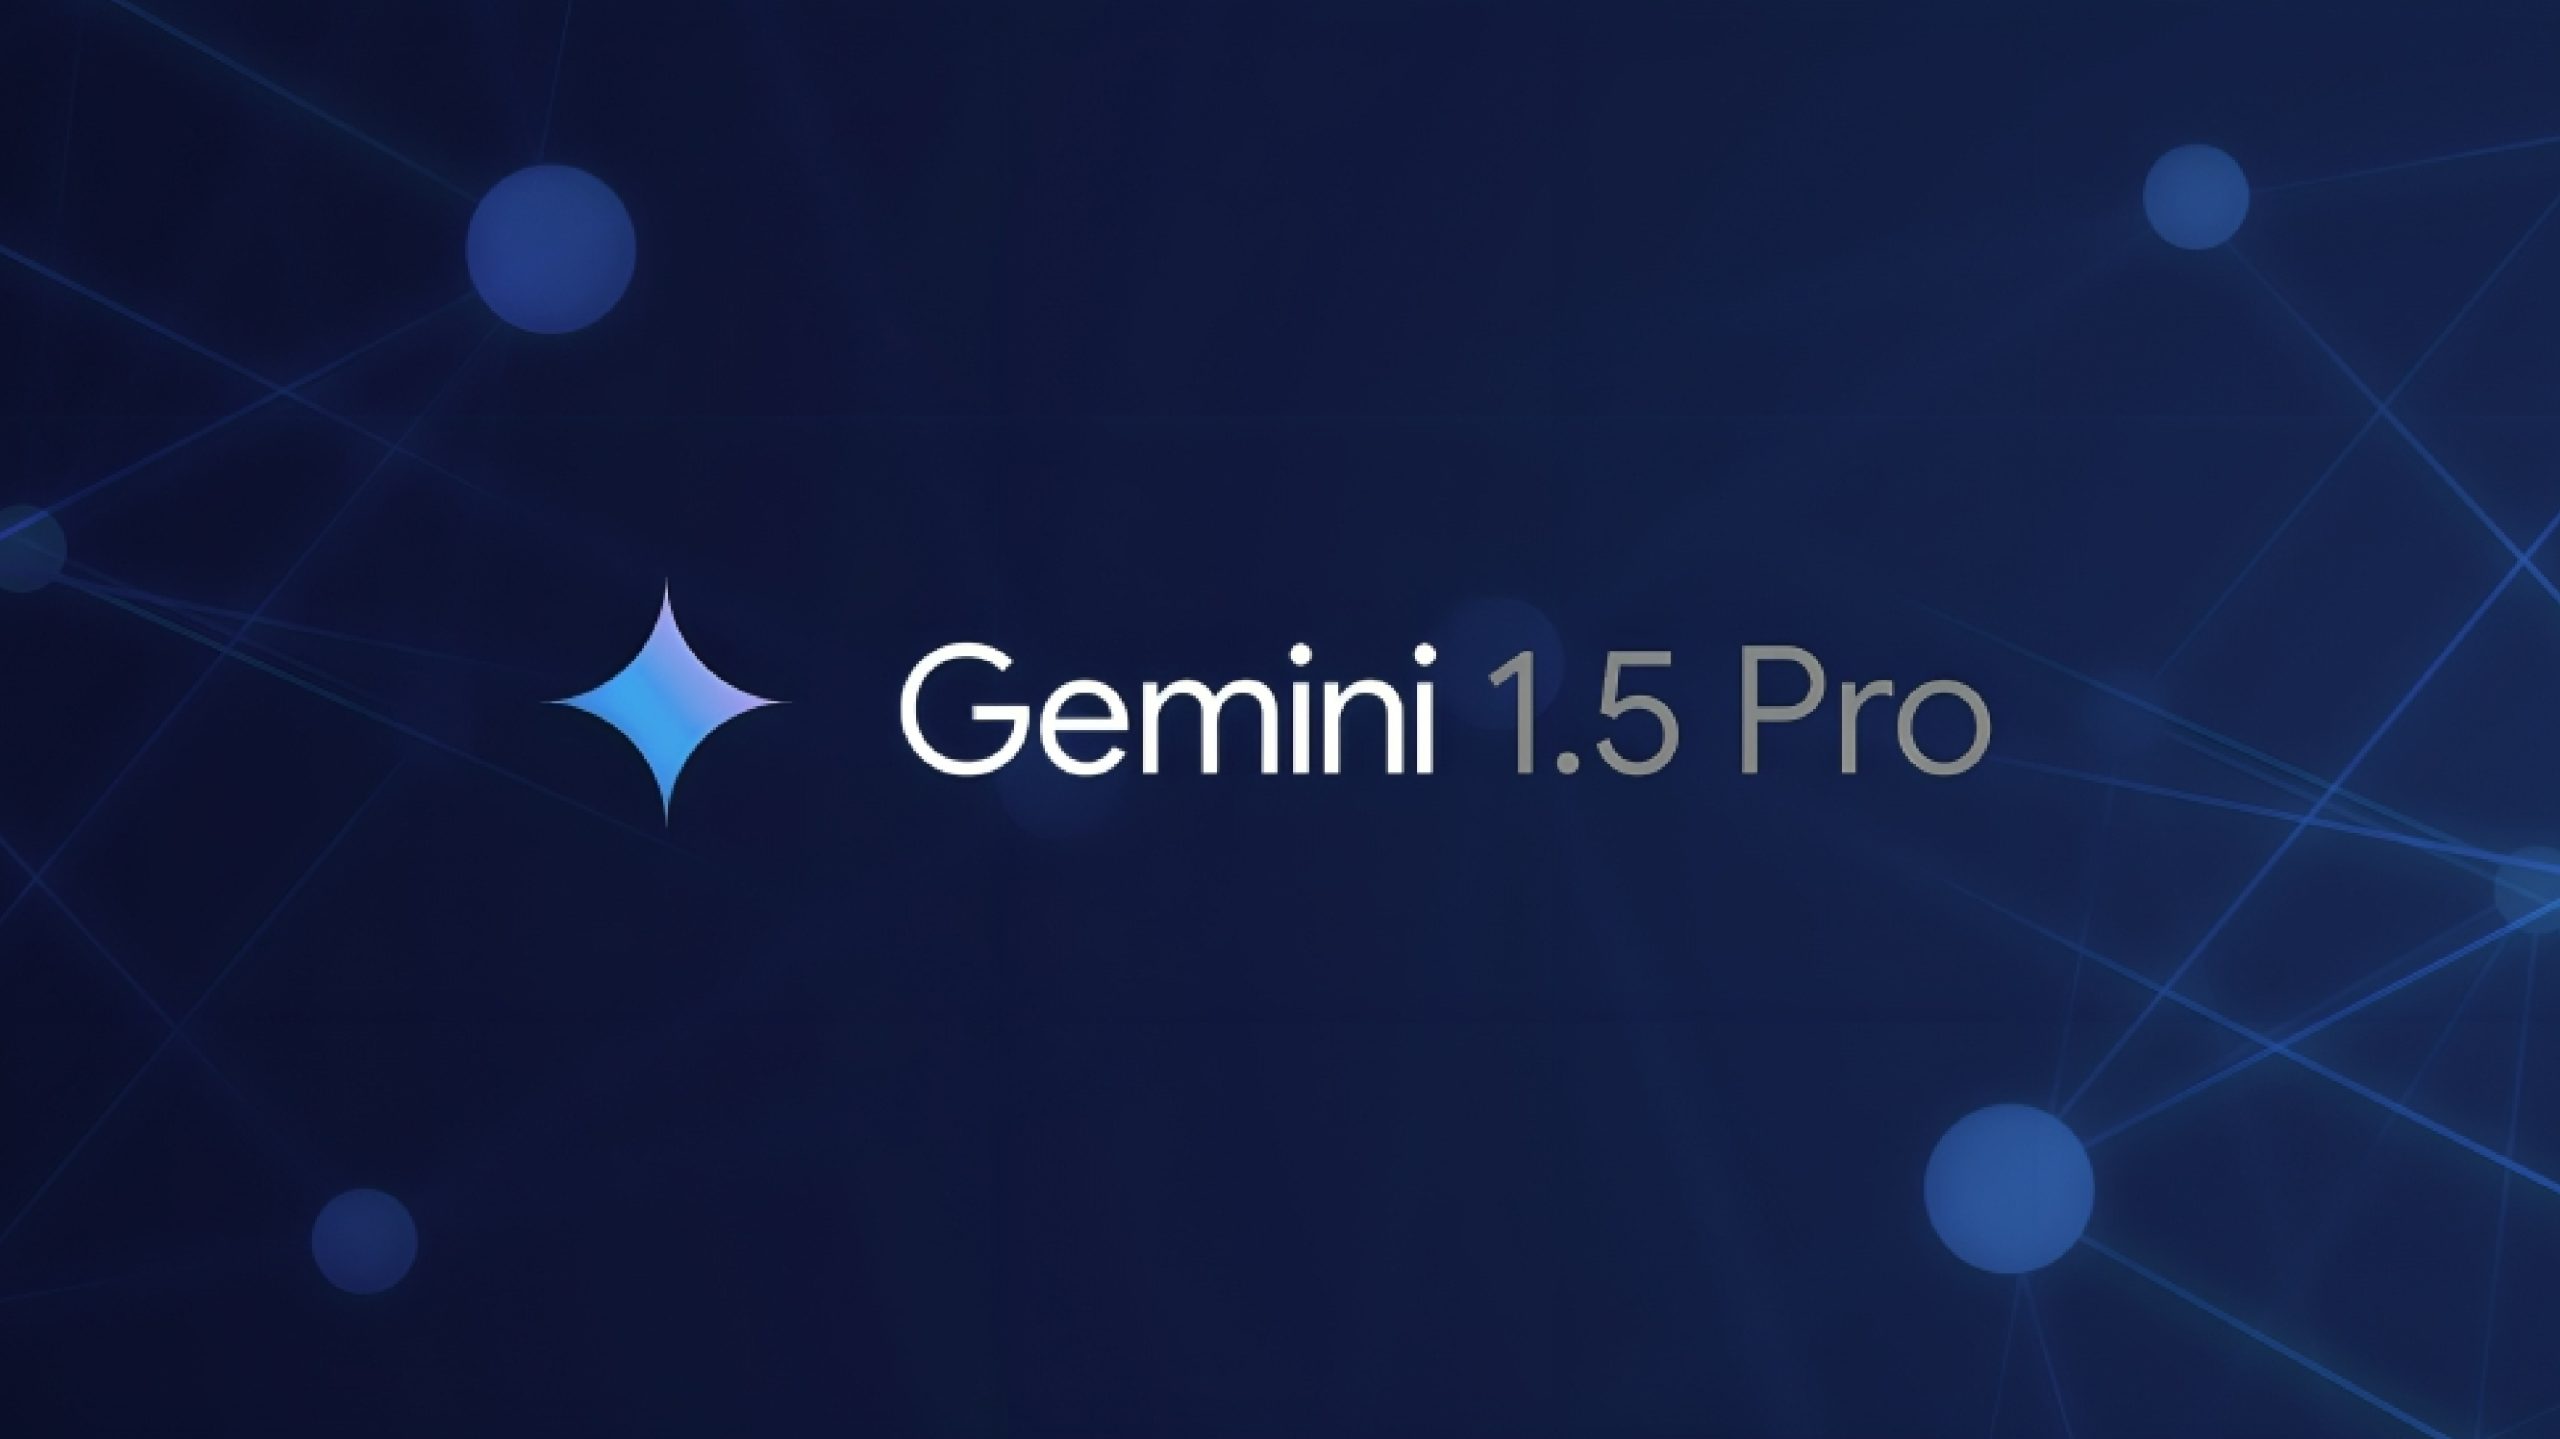 gemini-1.5-pro-scaled